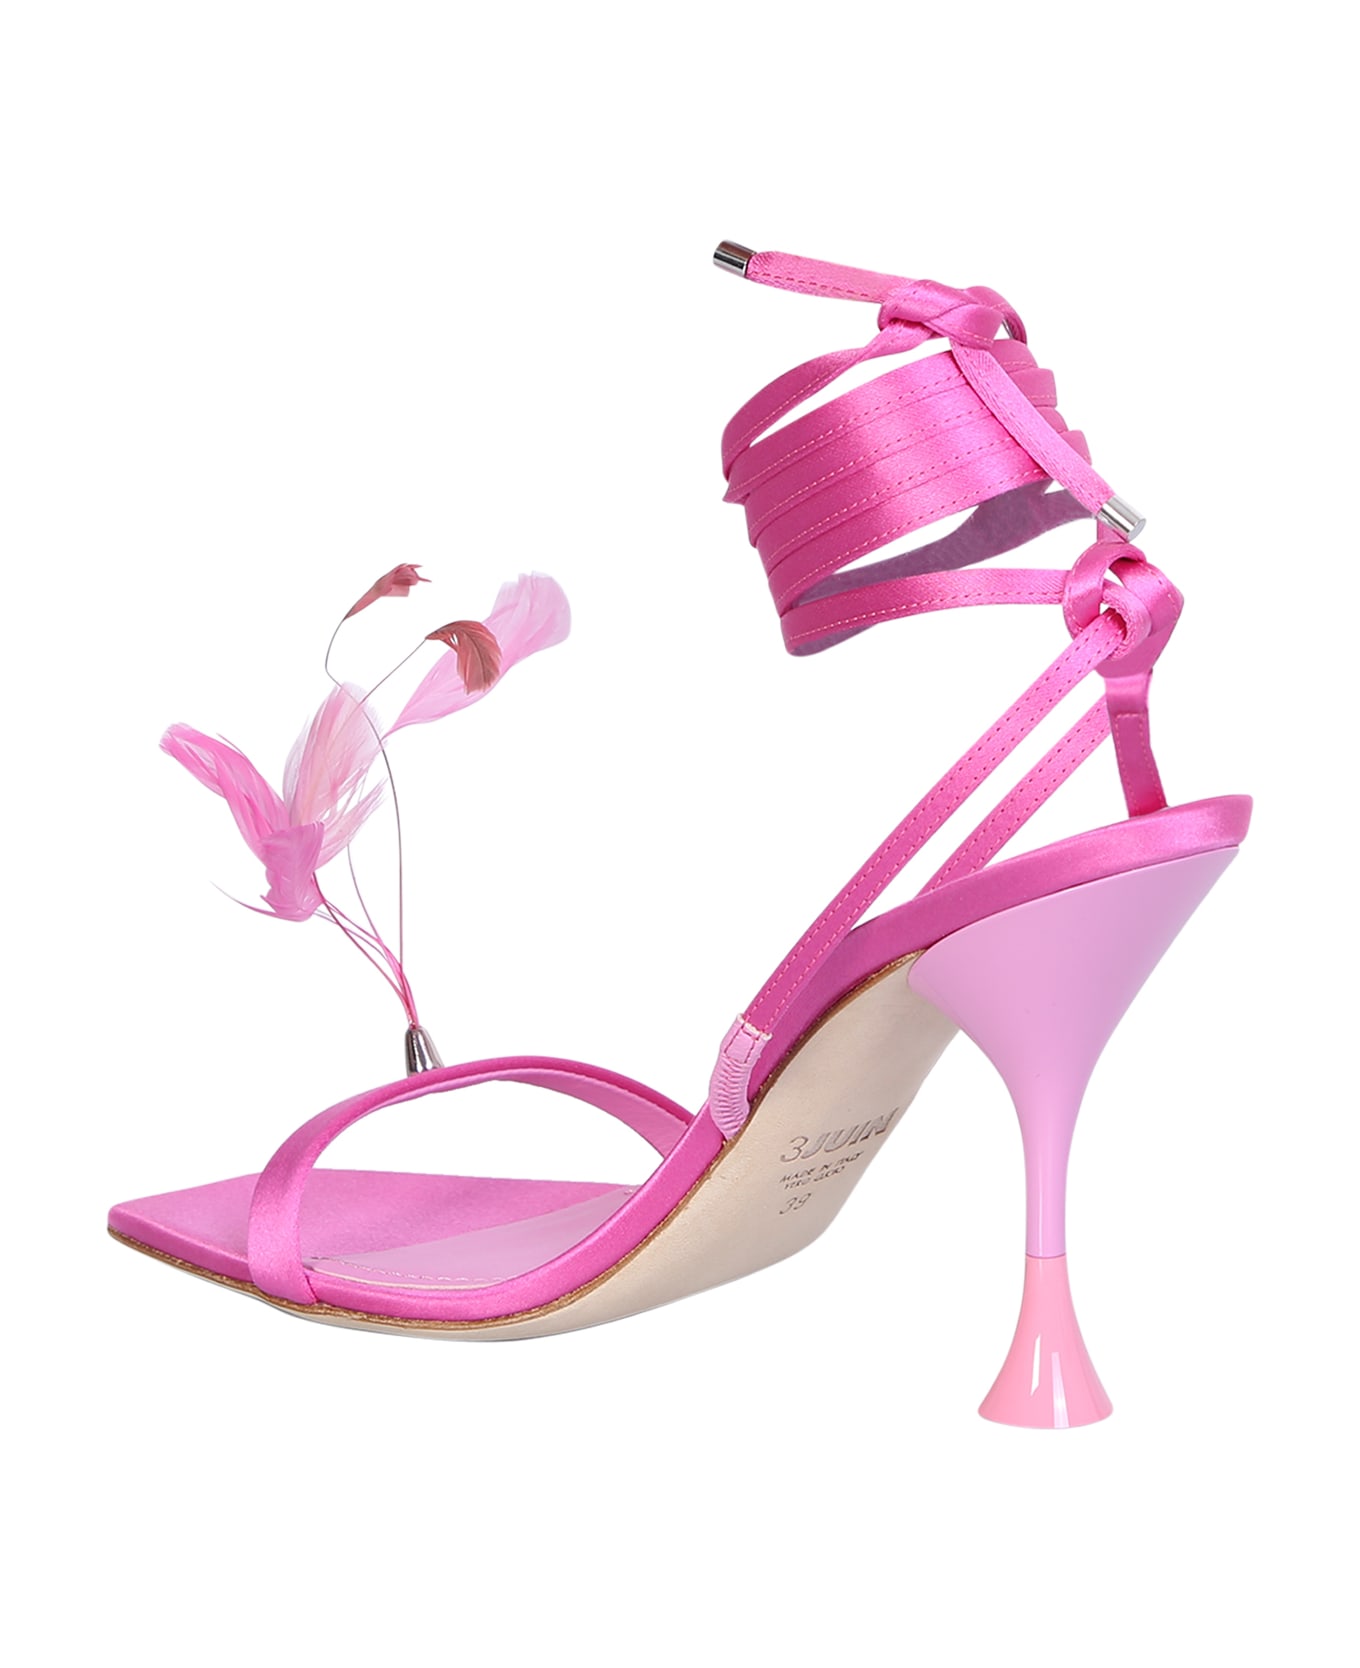 3JUIN Fuxia Kimi Sandals - Pink